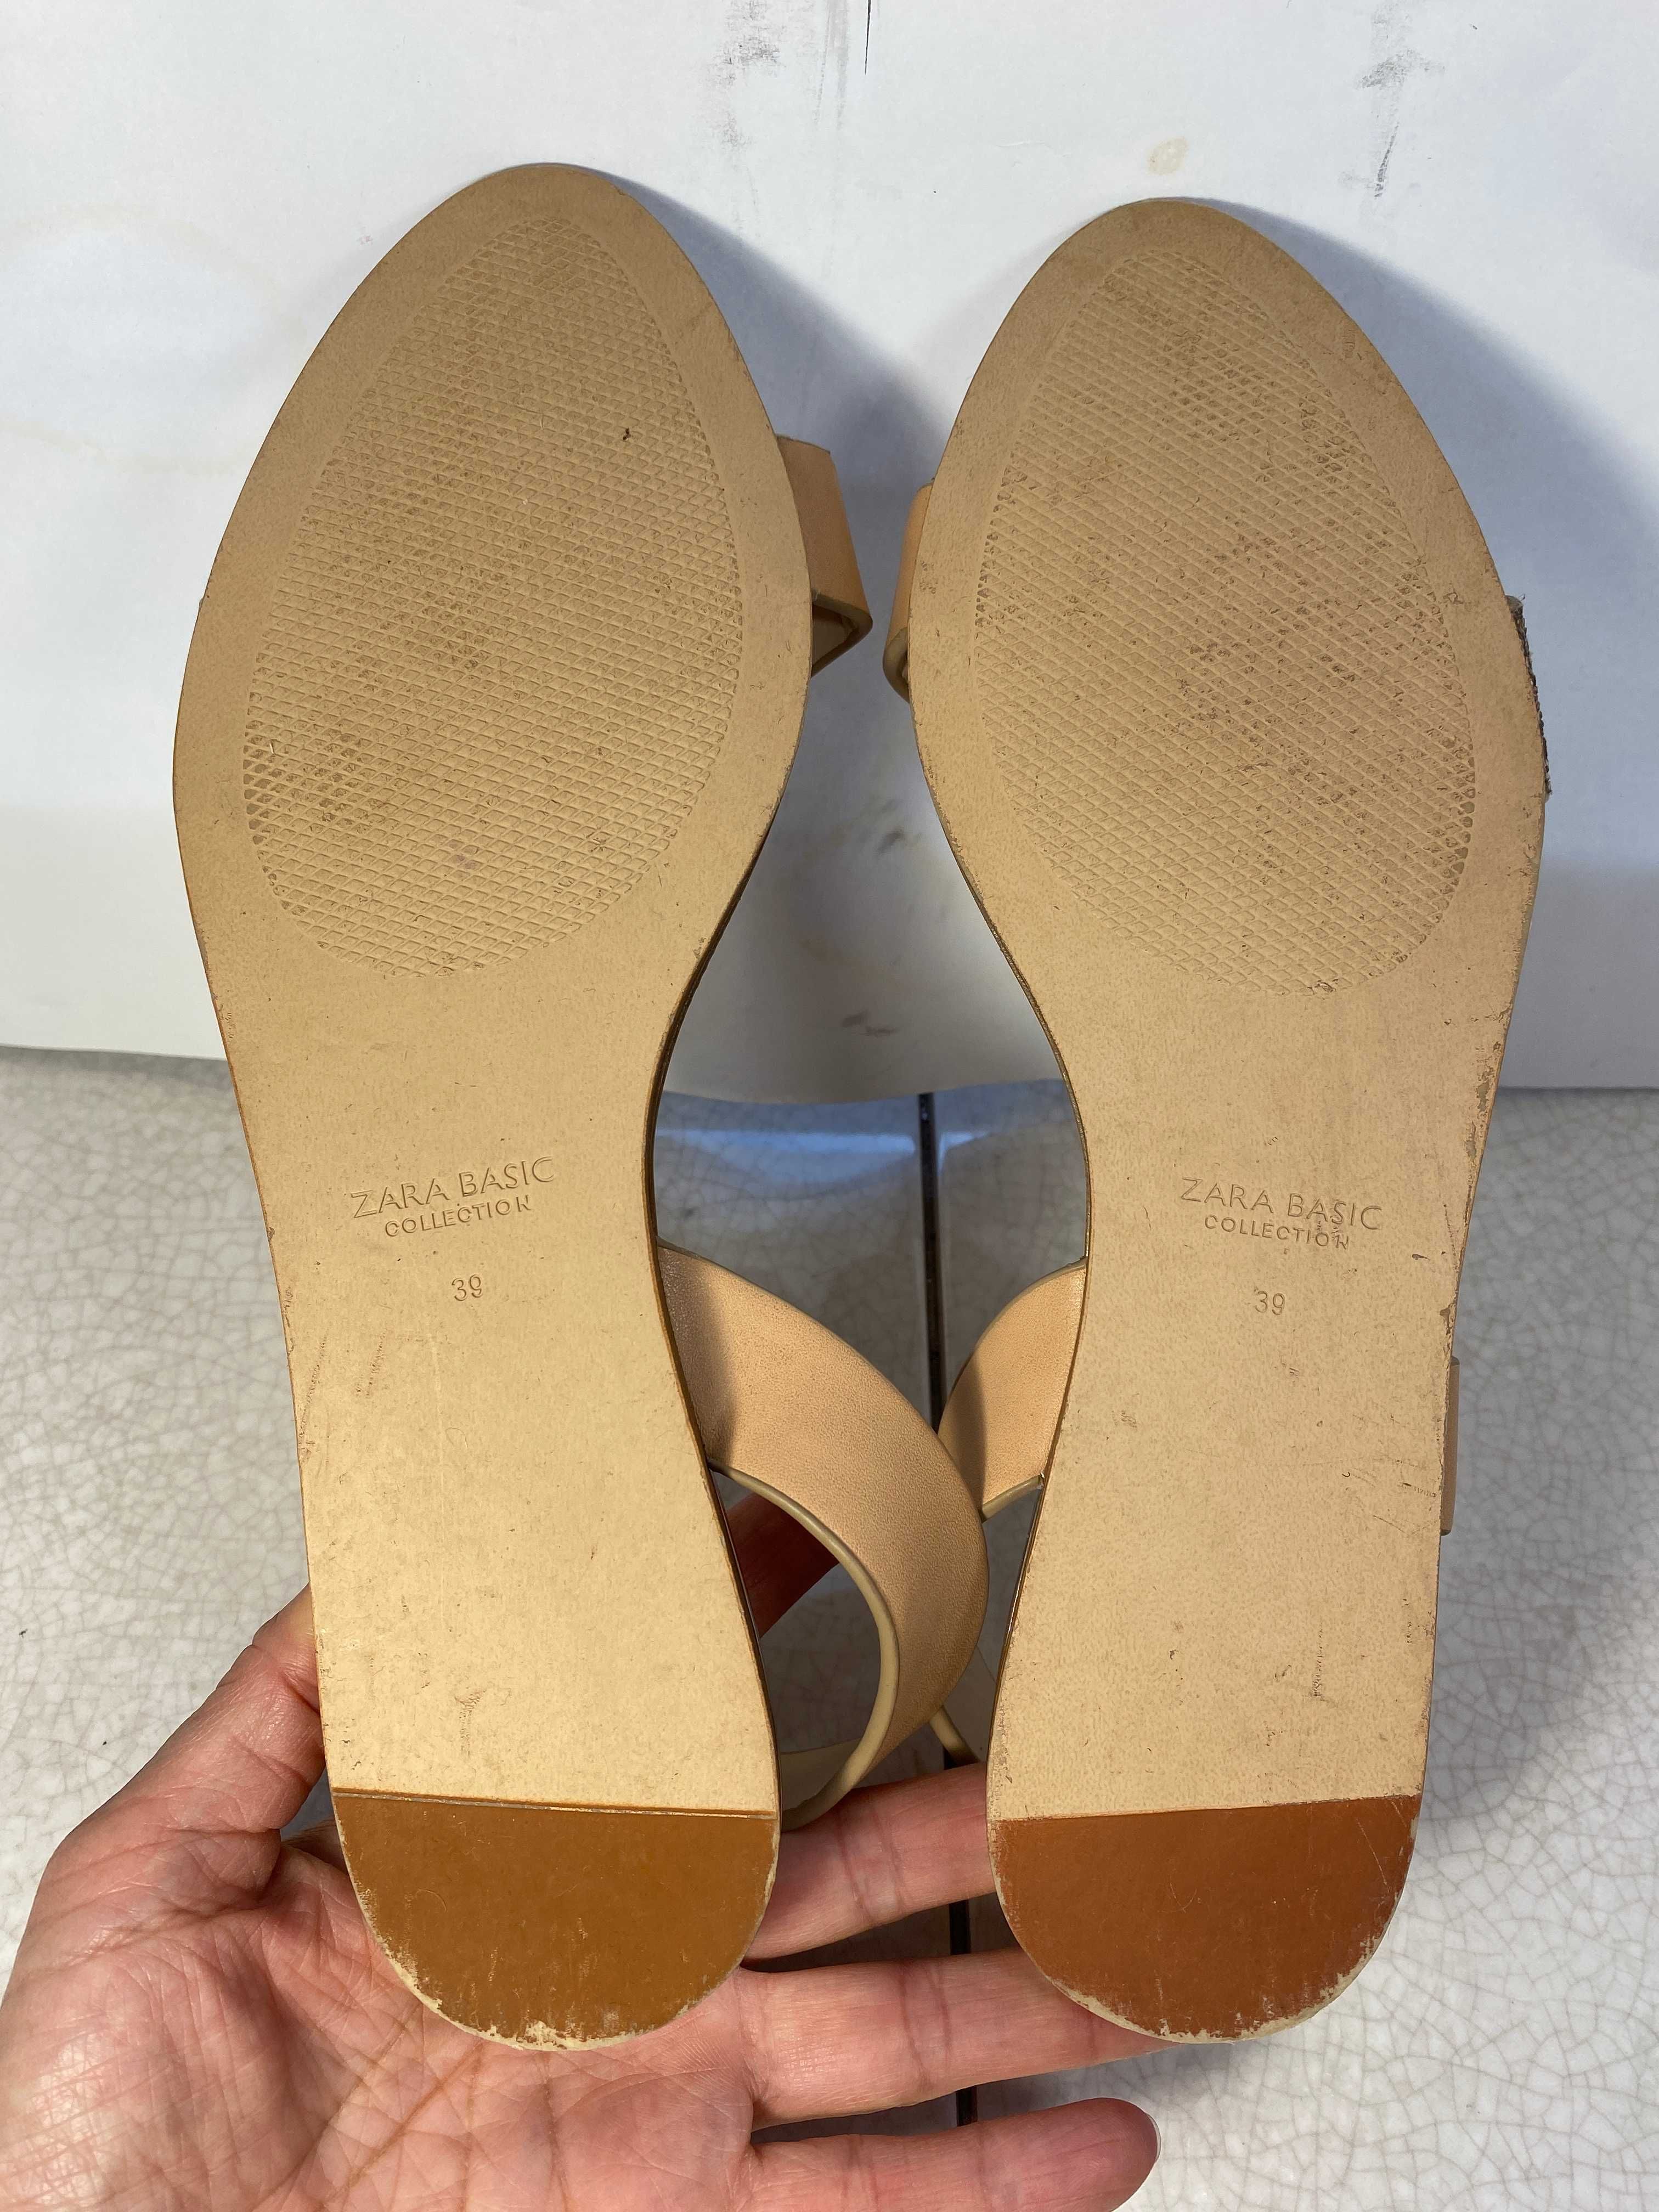 39 р Zara женские сандалии босоножки 25 см оригинал